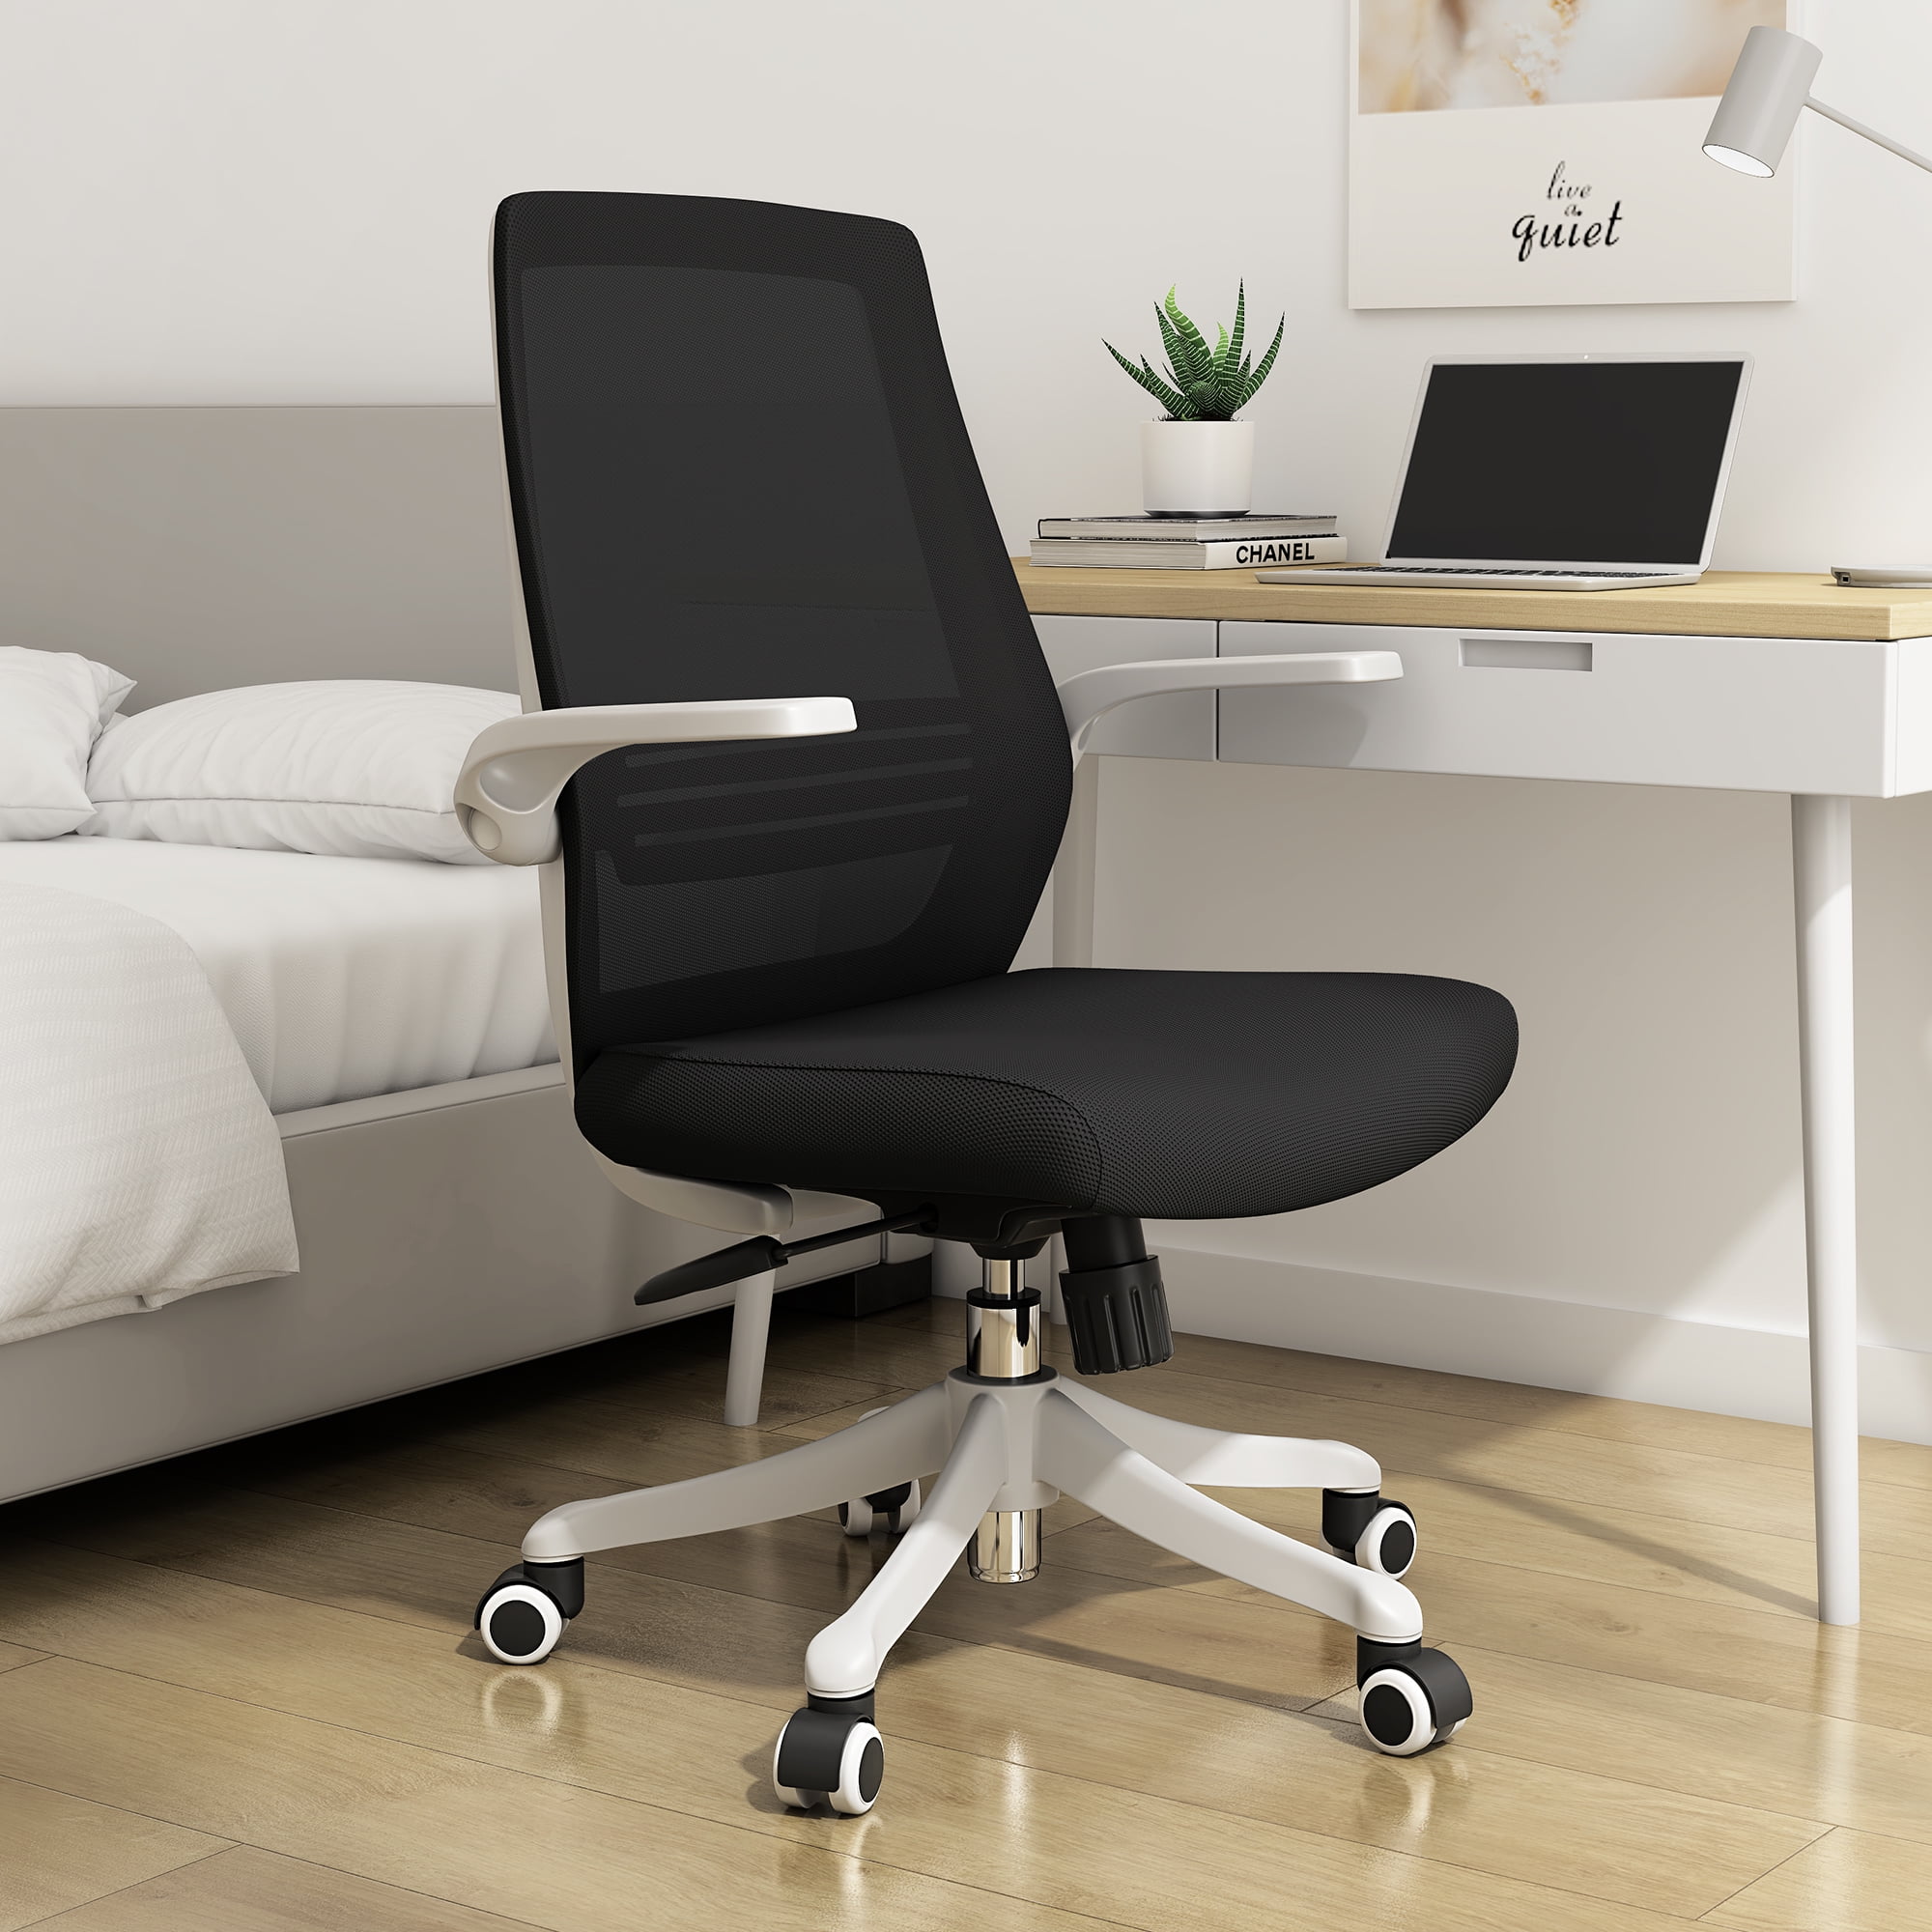 SIHOO MidBack Mesh Office Chair, Ergonomic Chair for Desk